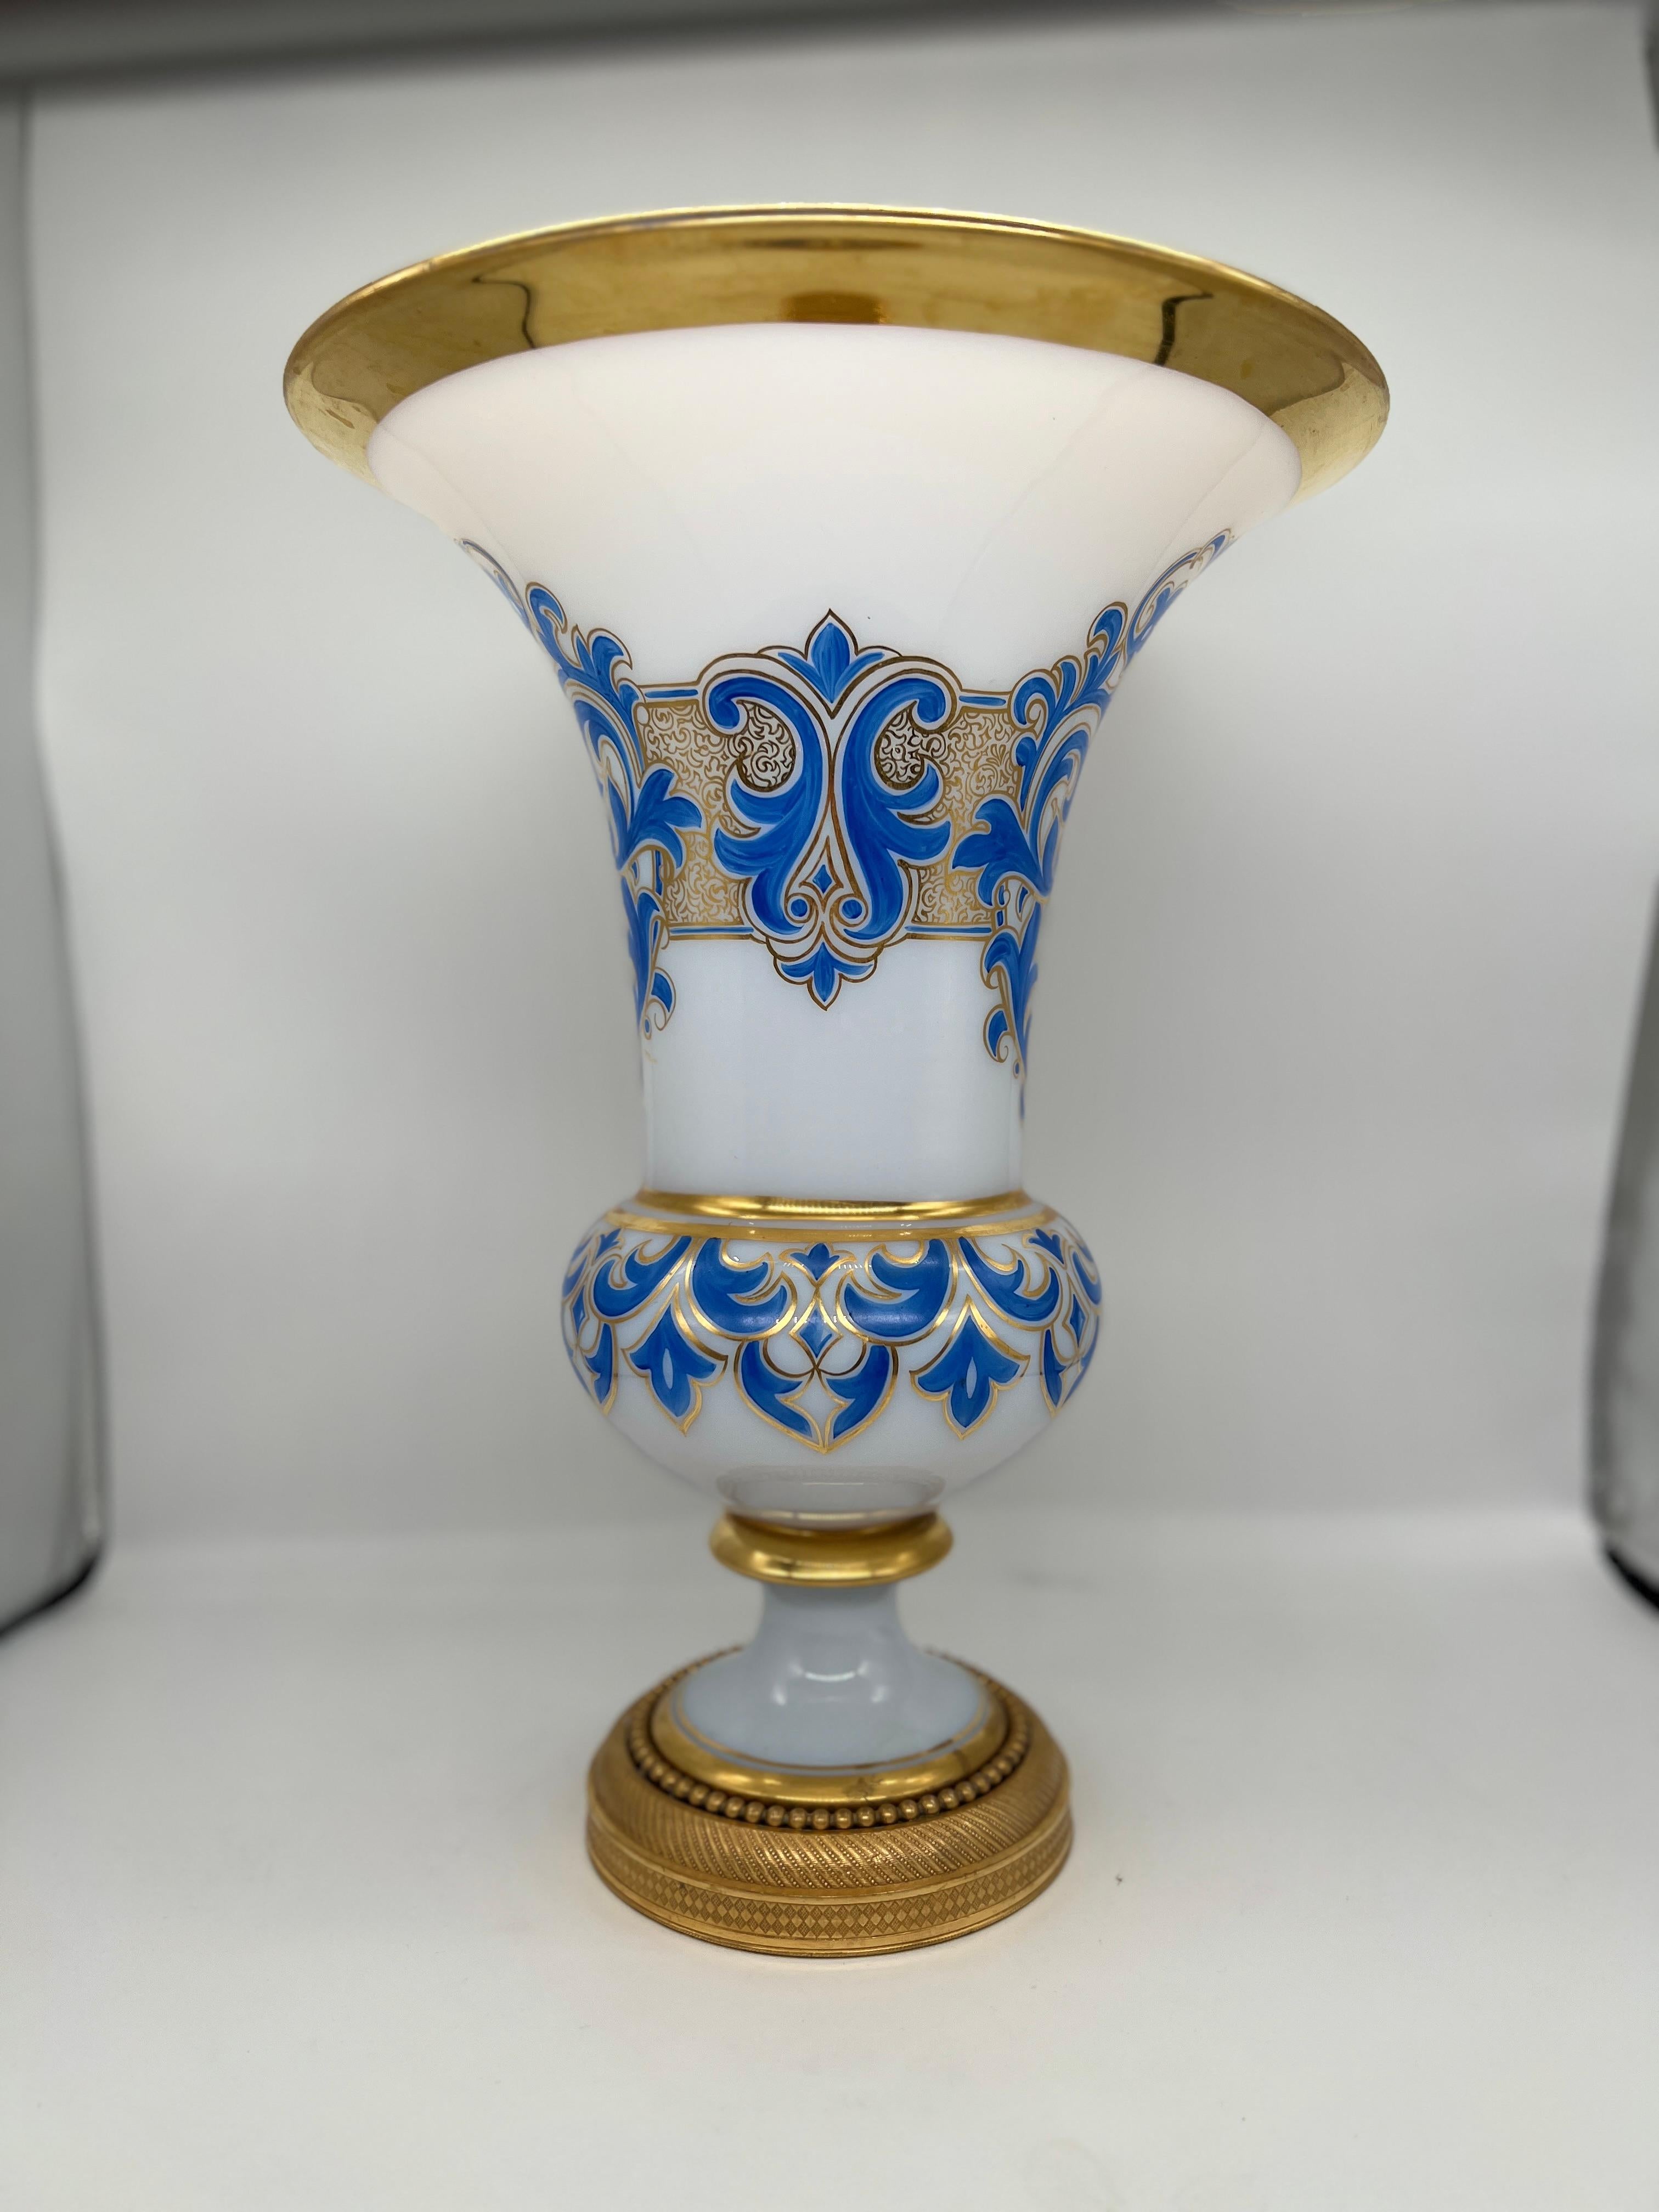 Lg. Baccarat French White Opaline, vergoldet, blau emailliert Bronze Ormolu Vase C. 1885 (Charles X.) im Angebot